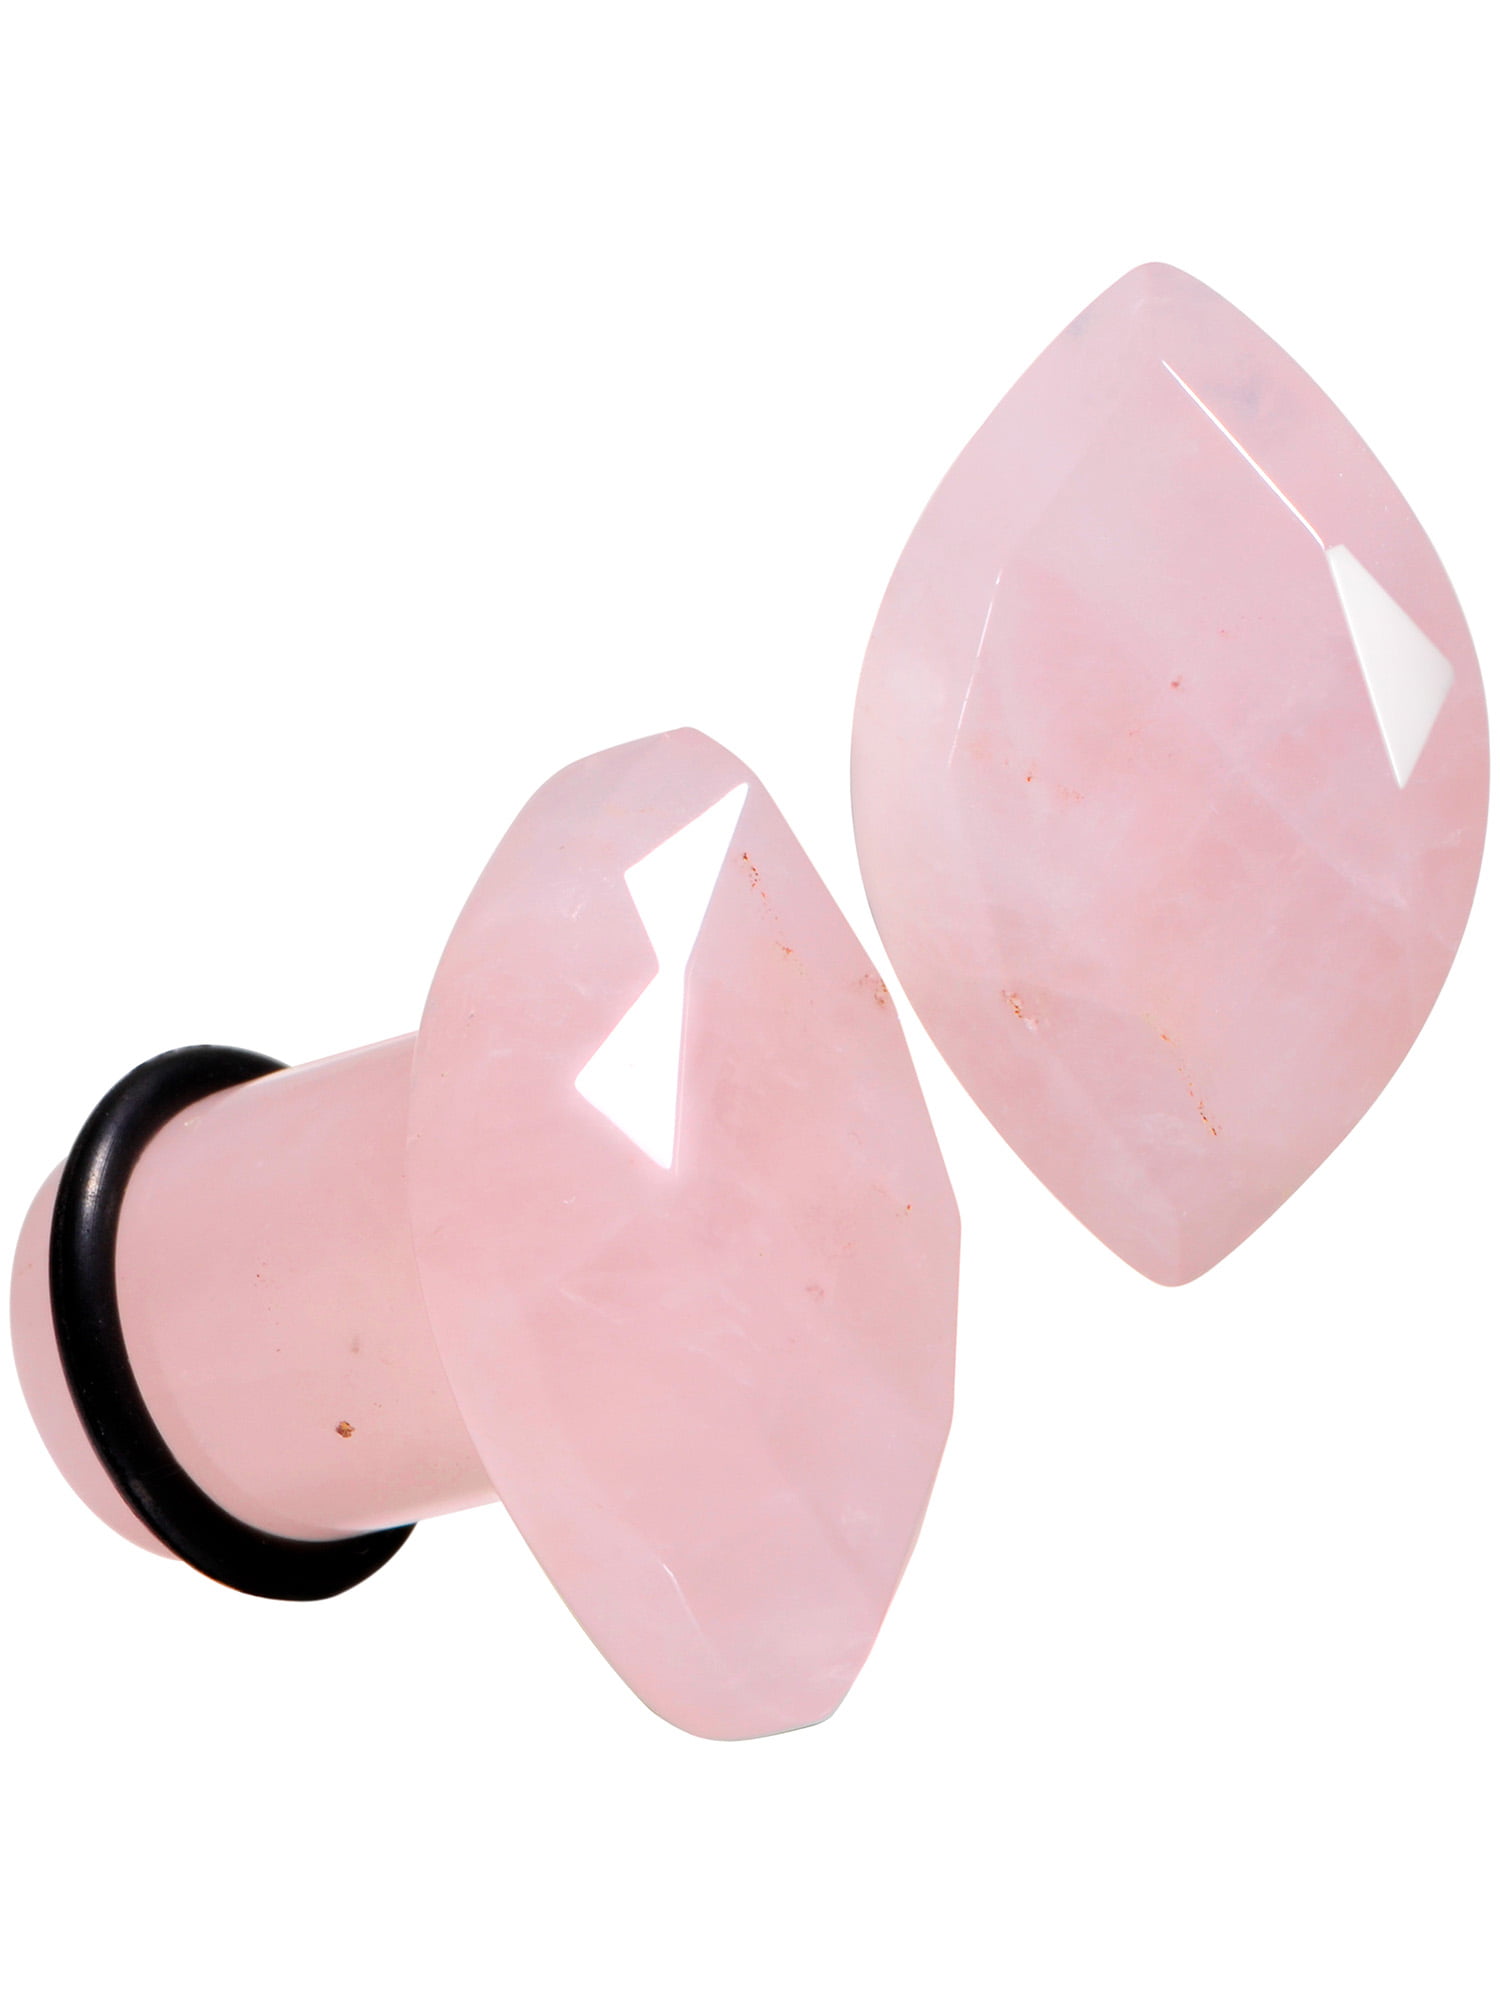 PAIR-Pink Pronged Gem Steel Single Flare Ear Plugs 10mm/00 Gauge Body Jewelry 